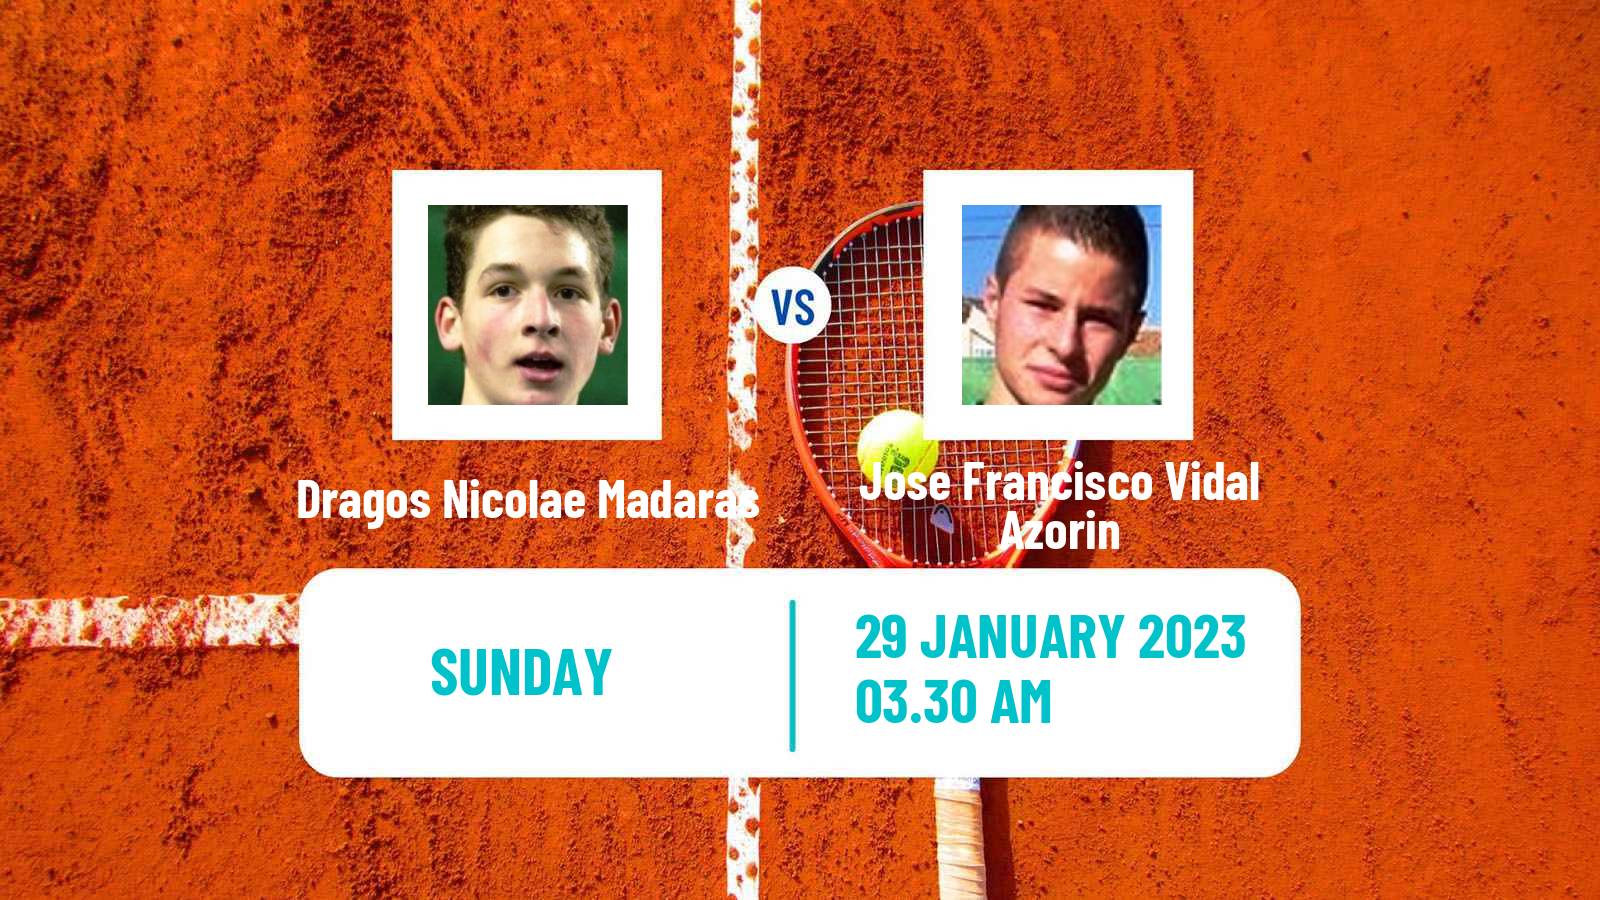 Tennis ITF Tournaments Dragos Nicolae Madaras - Jose Francisco Vidal Azorin